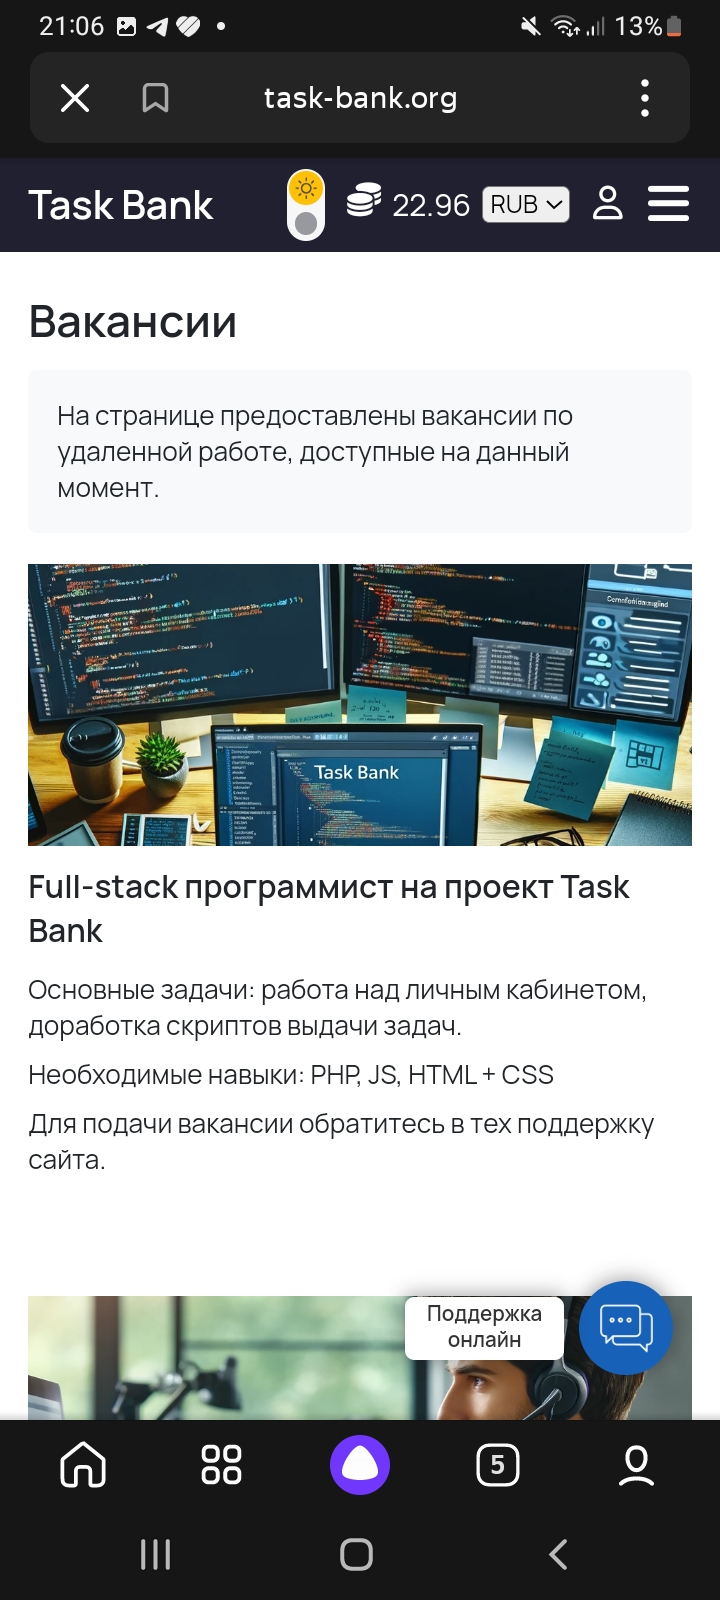 Task-Bank - Teks- Bank отзыв